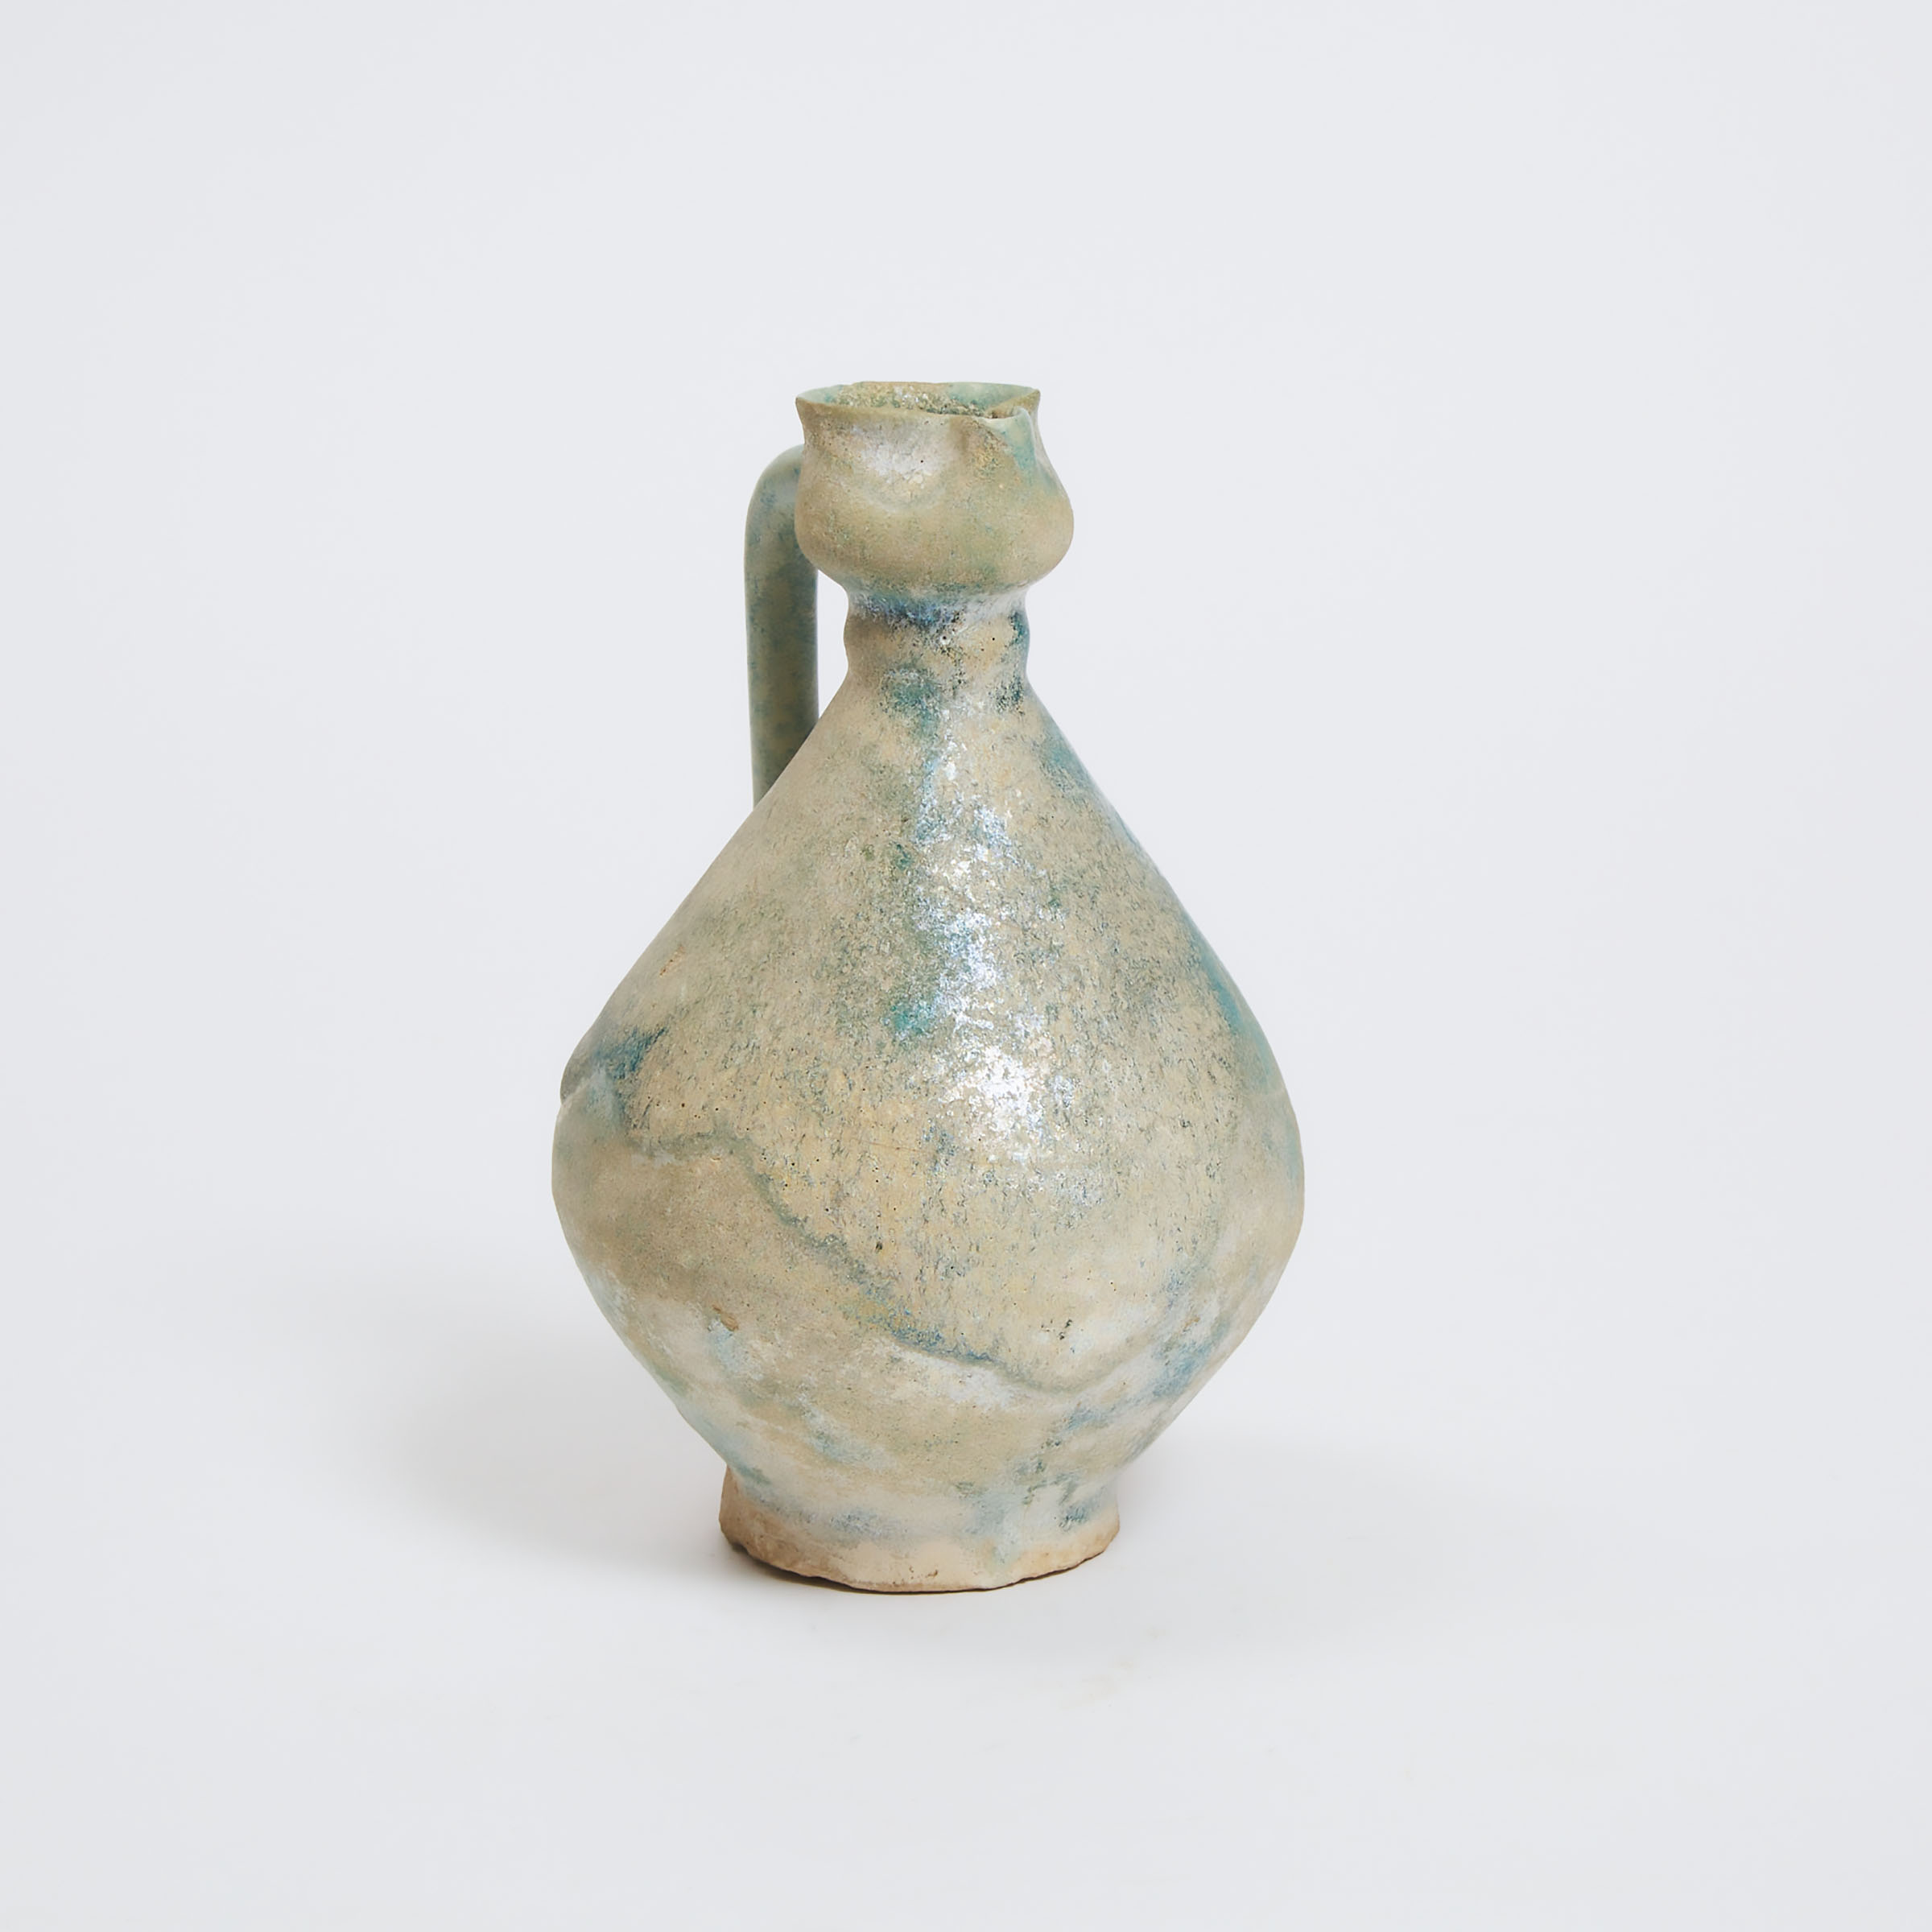 A Nishapur Turquoise-Glazed Pottery Jug, Iran, 12th/13th Century